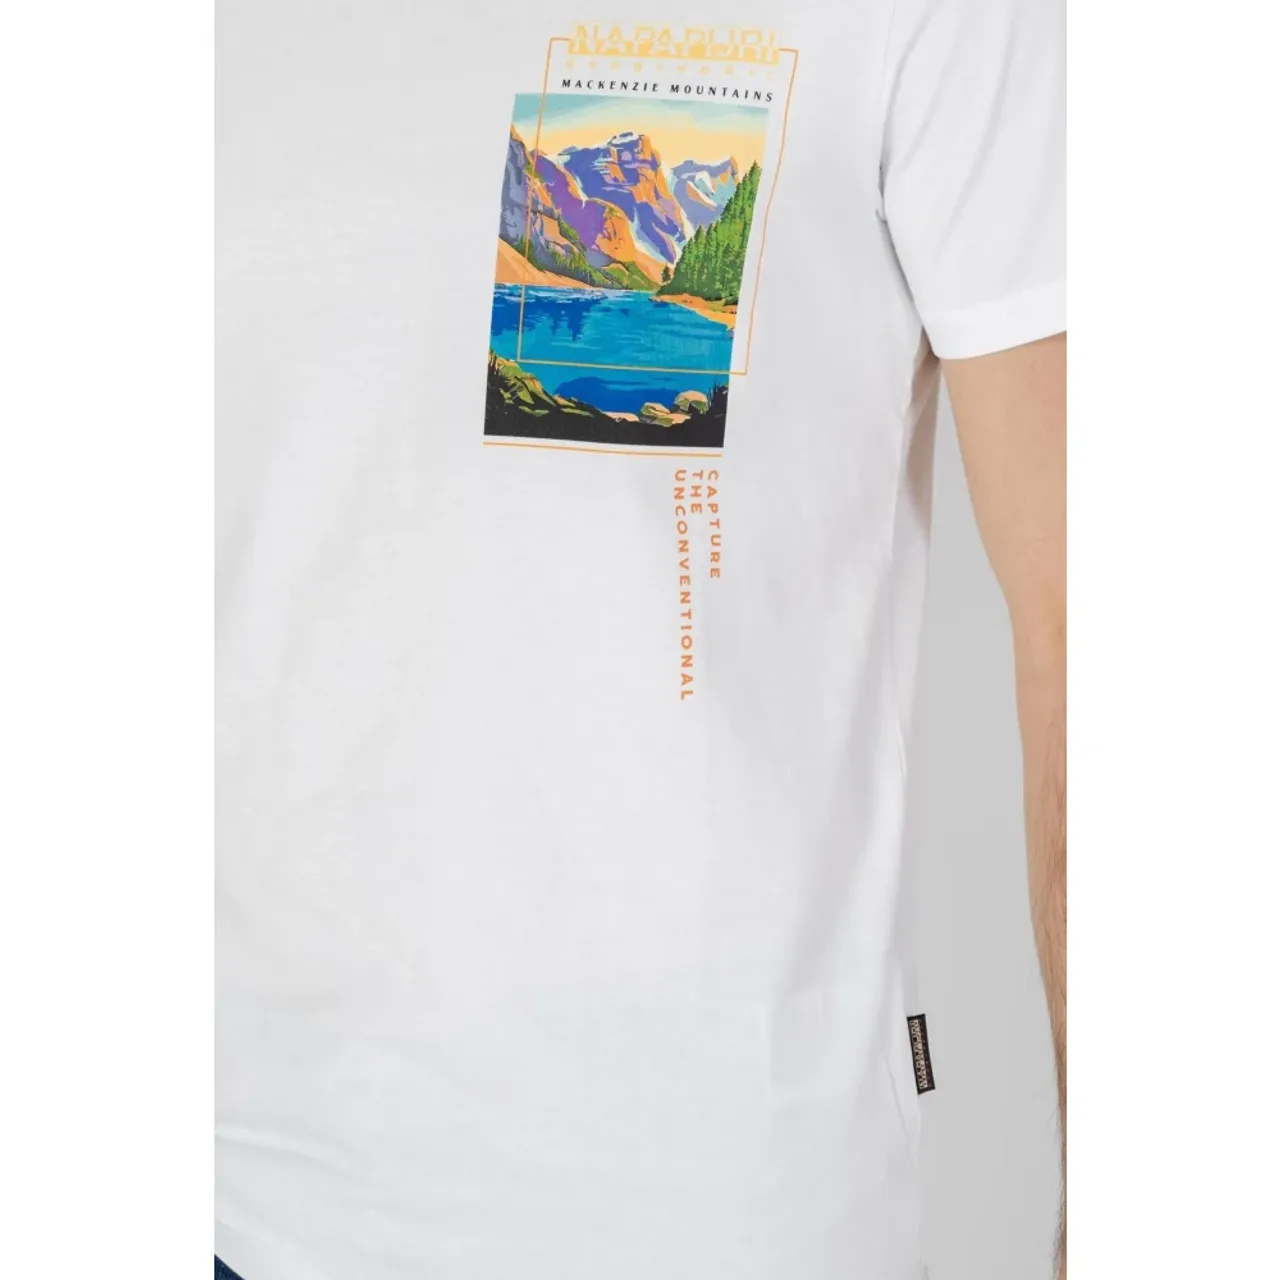 Napapijri , Men's T-Shirt Spring/Summer Collection ,White male, Sizes: